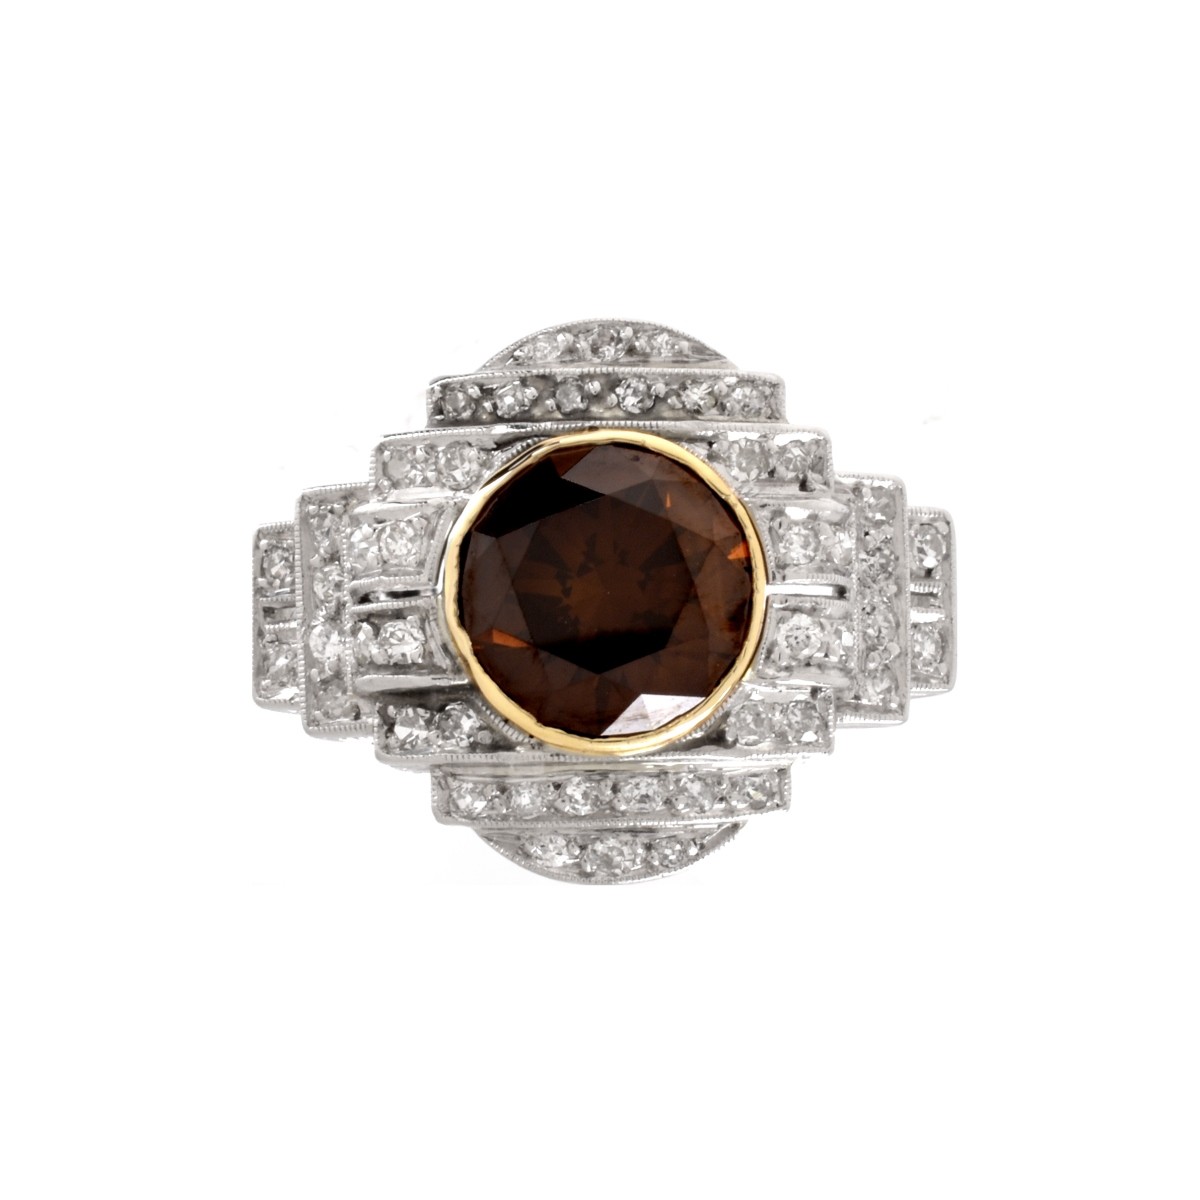 GIA Art Deco Fancy Diamond and Platinum Ring